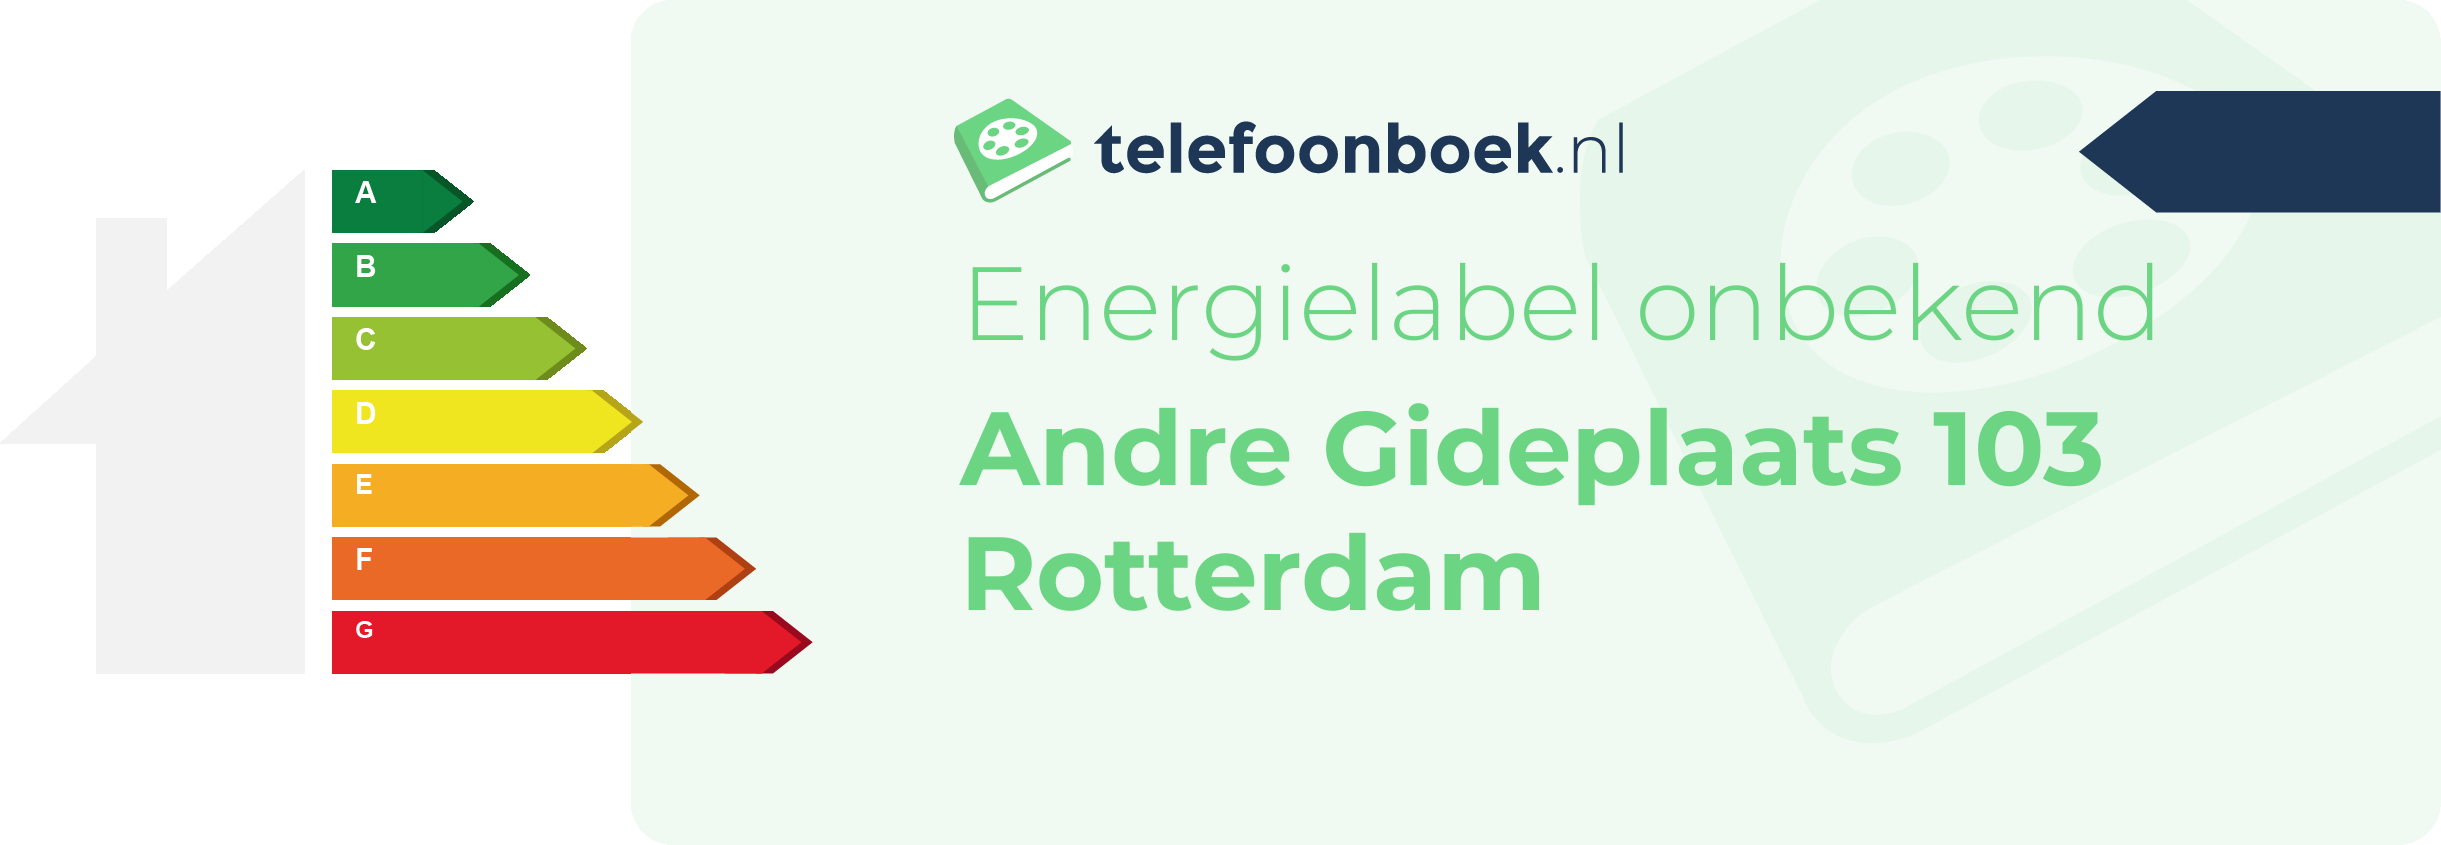 Energielabel Andre Gideplaats 103 Rotterdam